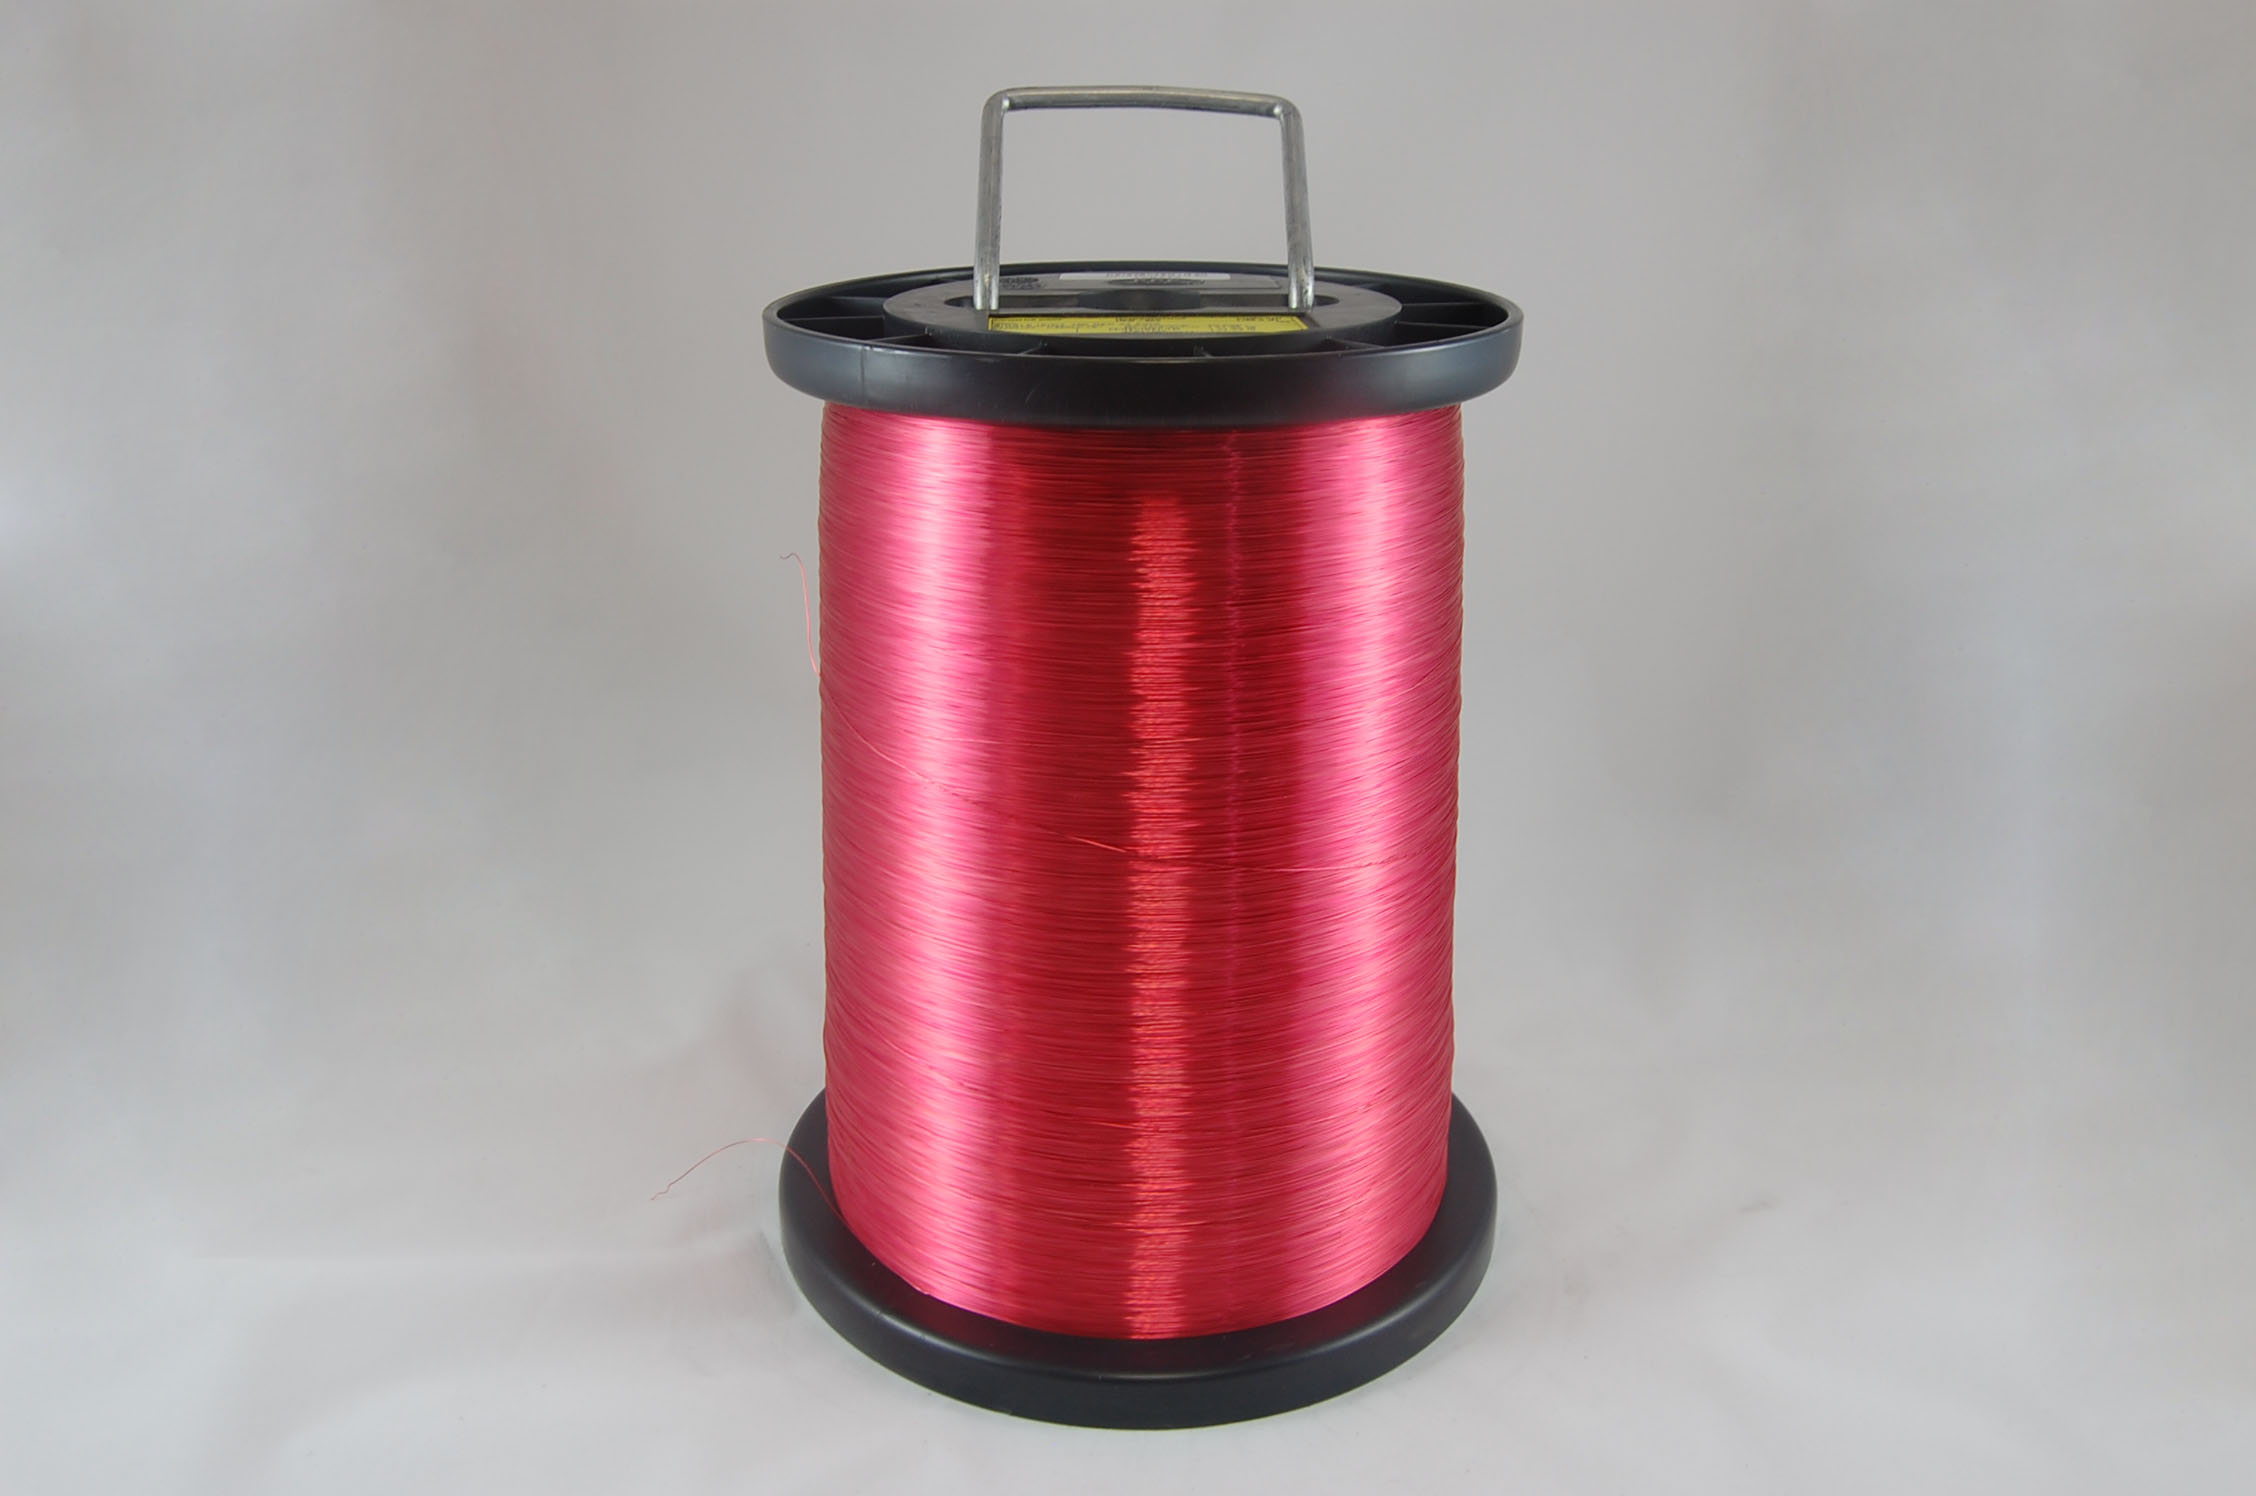 #19.5 Heavy INVEMID 200 Round MW 35 Copper Magnet Wire 200°C, copper, 45 LB half pack pail (average wght.)